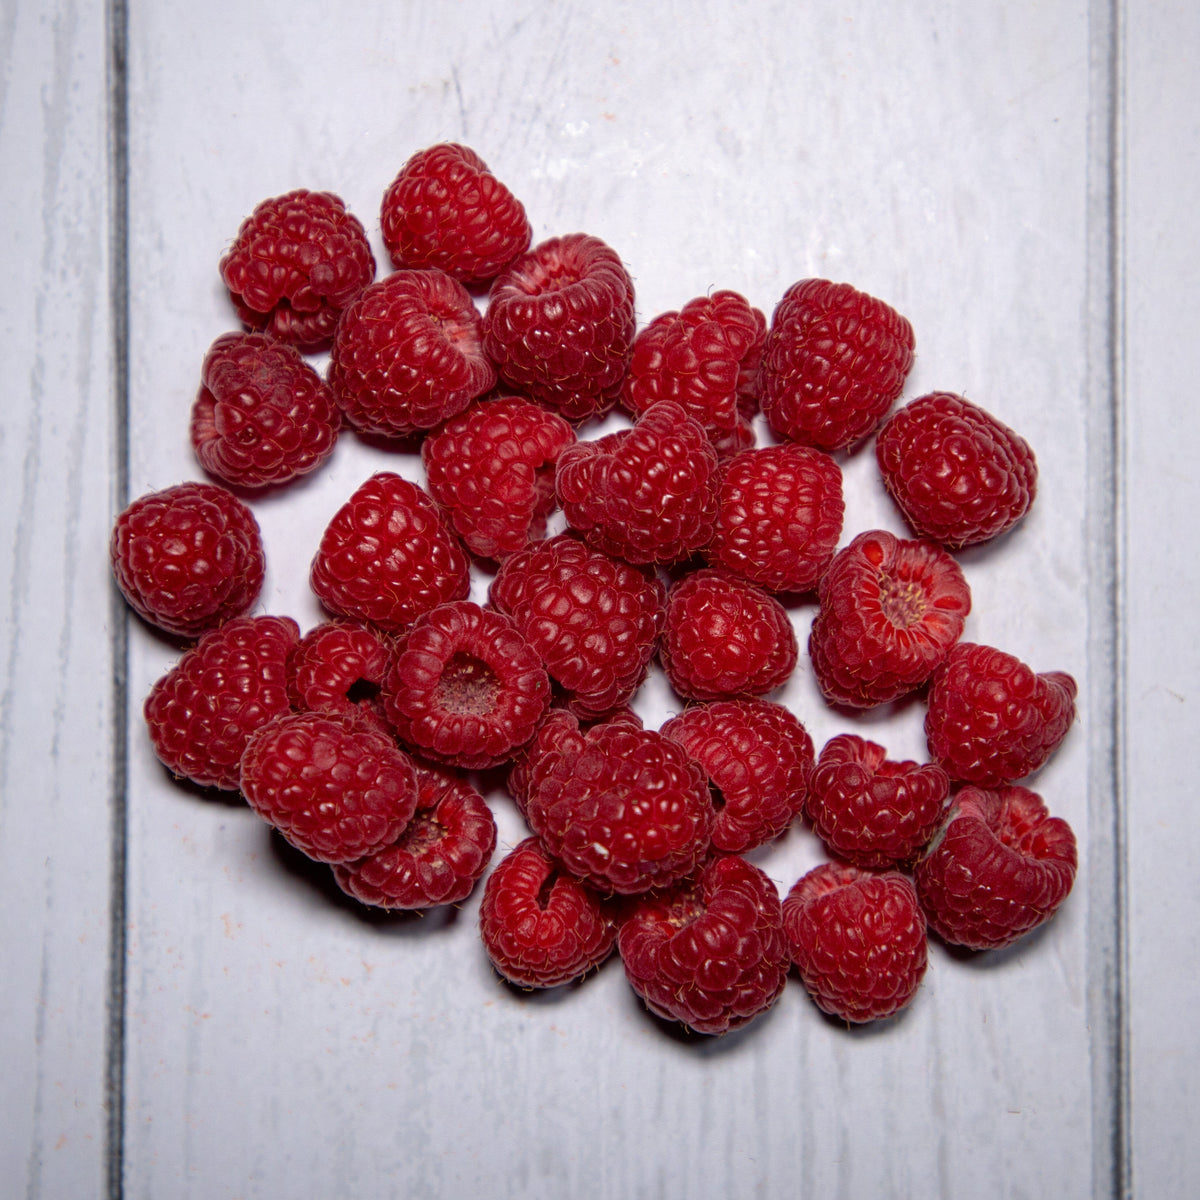 Raspberry Imported - 125 Gms - Kedia Organic Agro Farms Imported Fruits Kedia Organic Agro Farms 